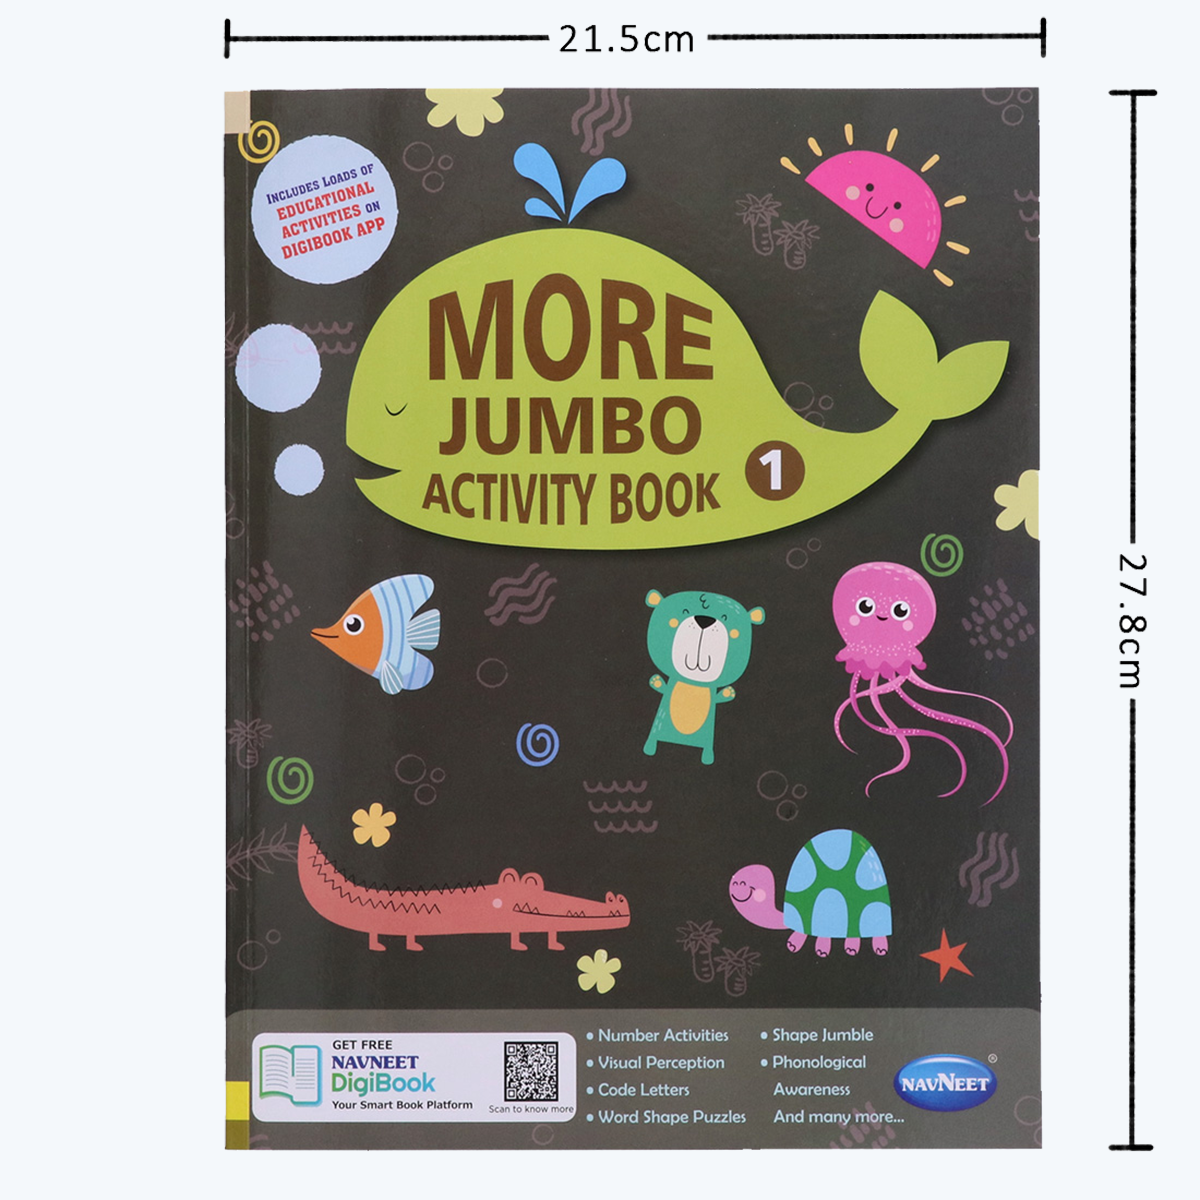 Navneet More Jumbo Activity Book 1- Fun Activities for Kids- Visual Perception, Code Letters, Word Shape Puzzles, Shape Jumbo, Phonologial Awareness, Number Activities